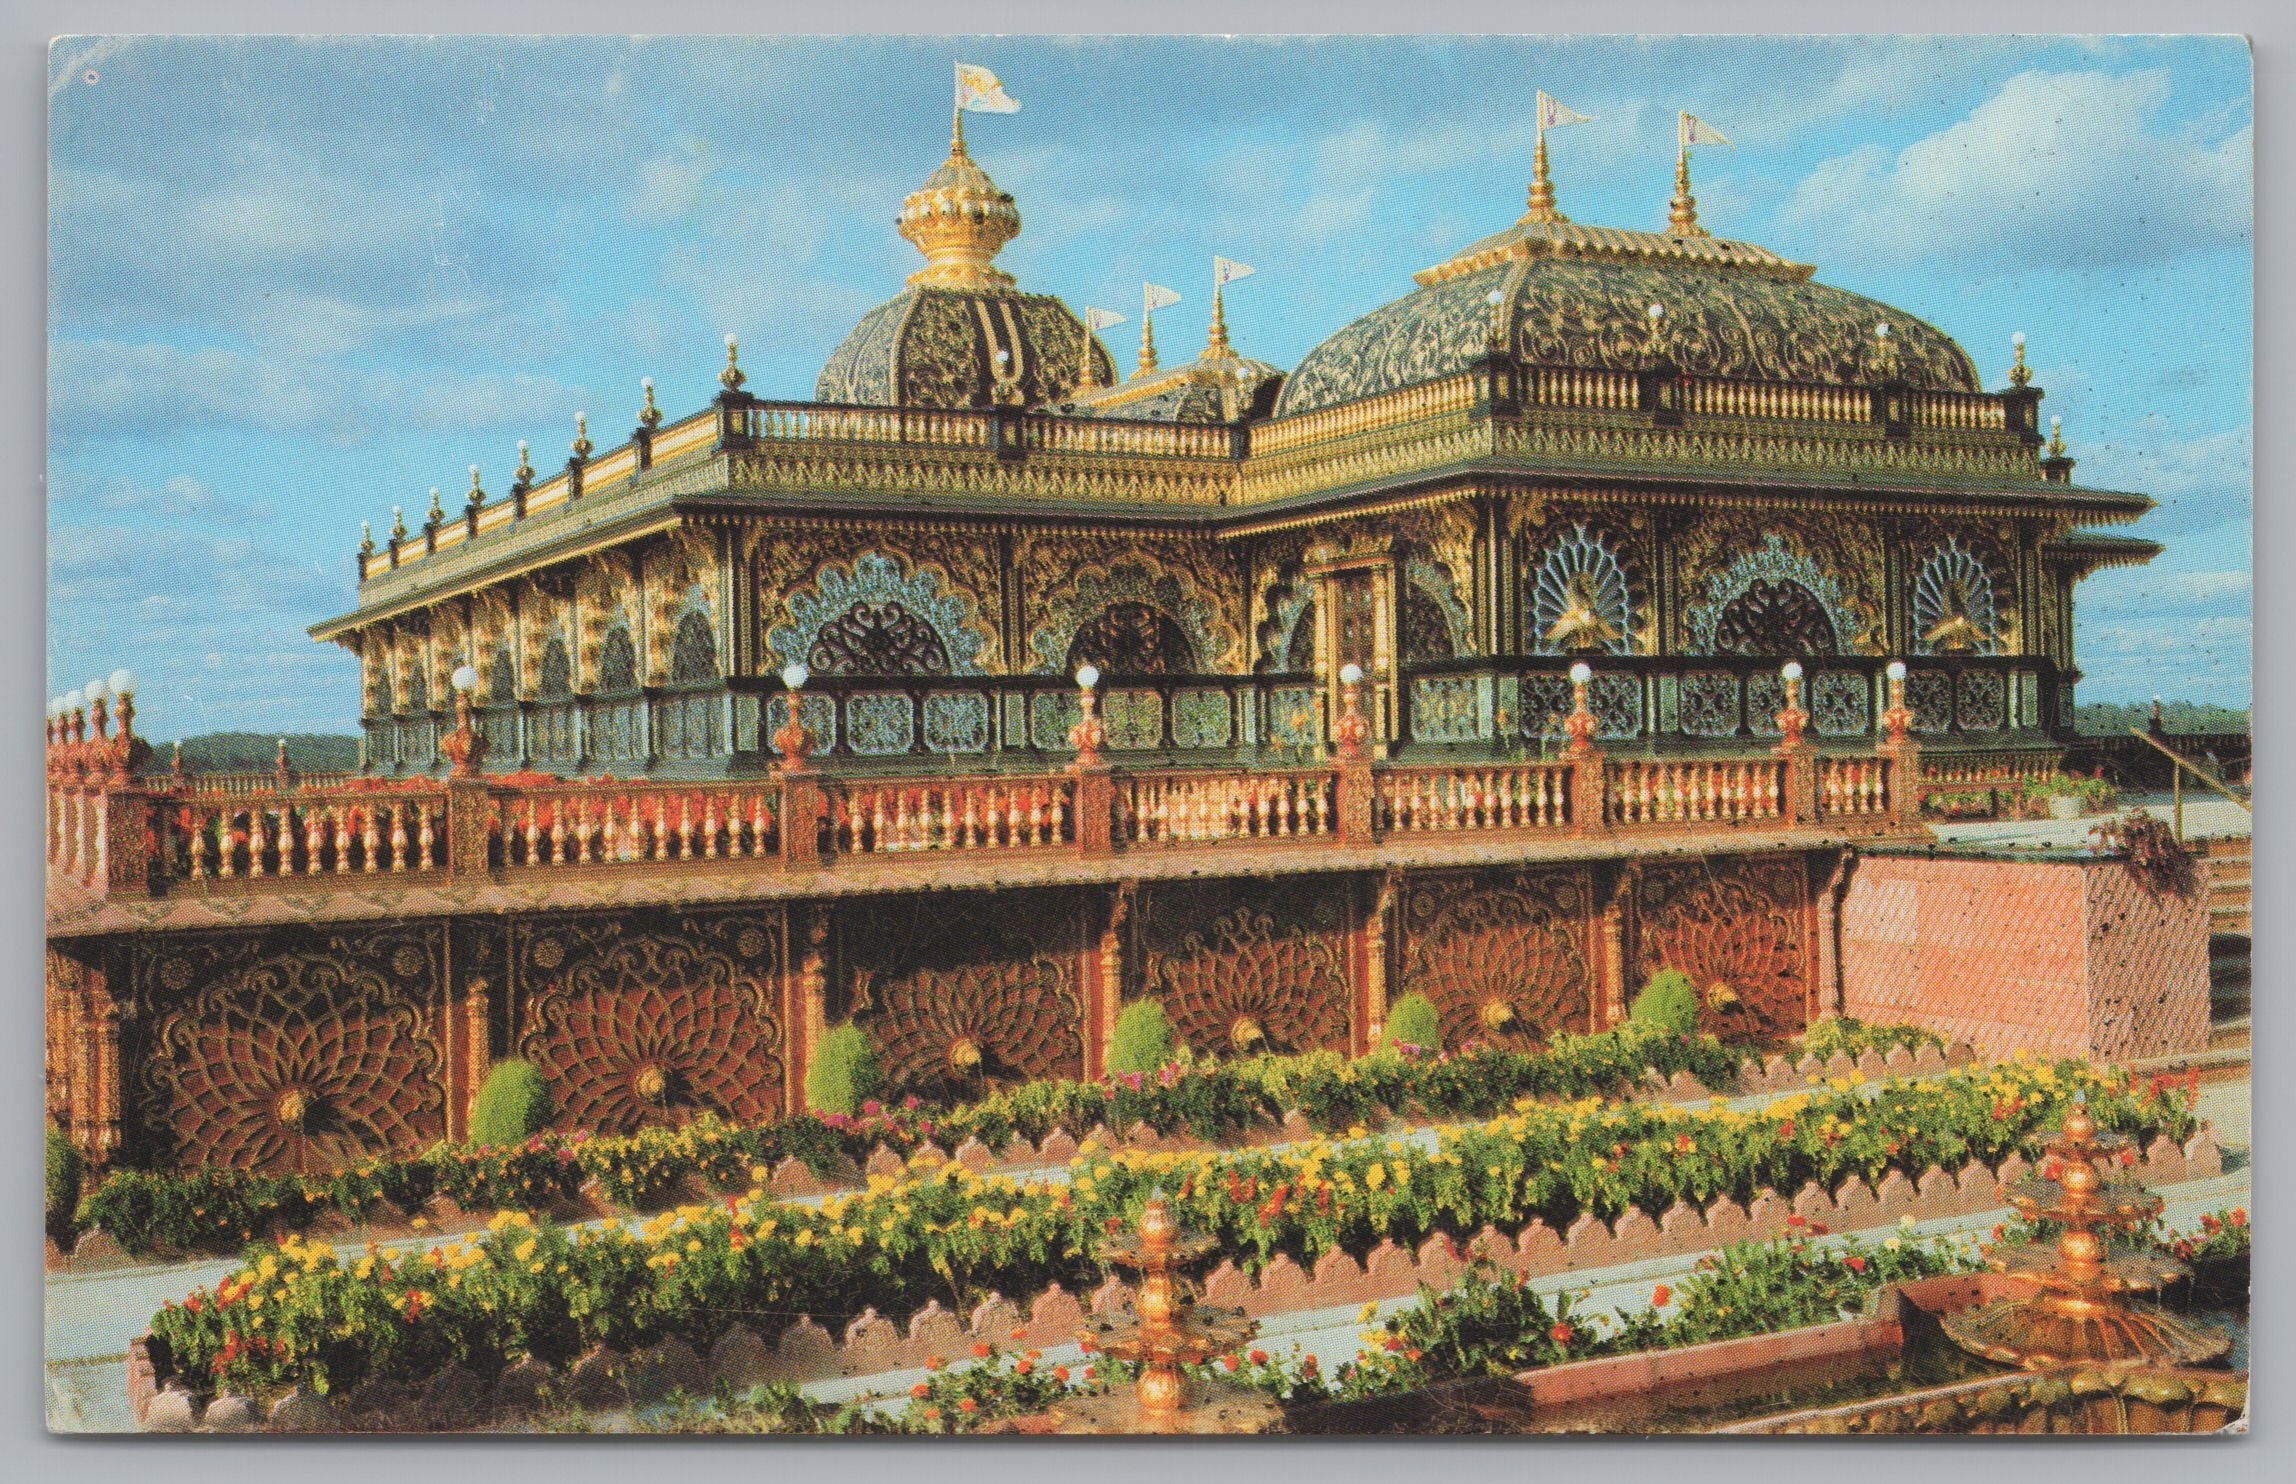 Prabhupada’s Palace Of Gold, Moundsville, West Virginia, USA, Vintage Post Card